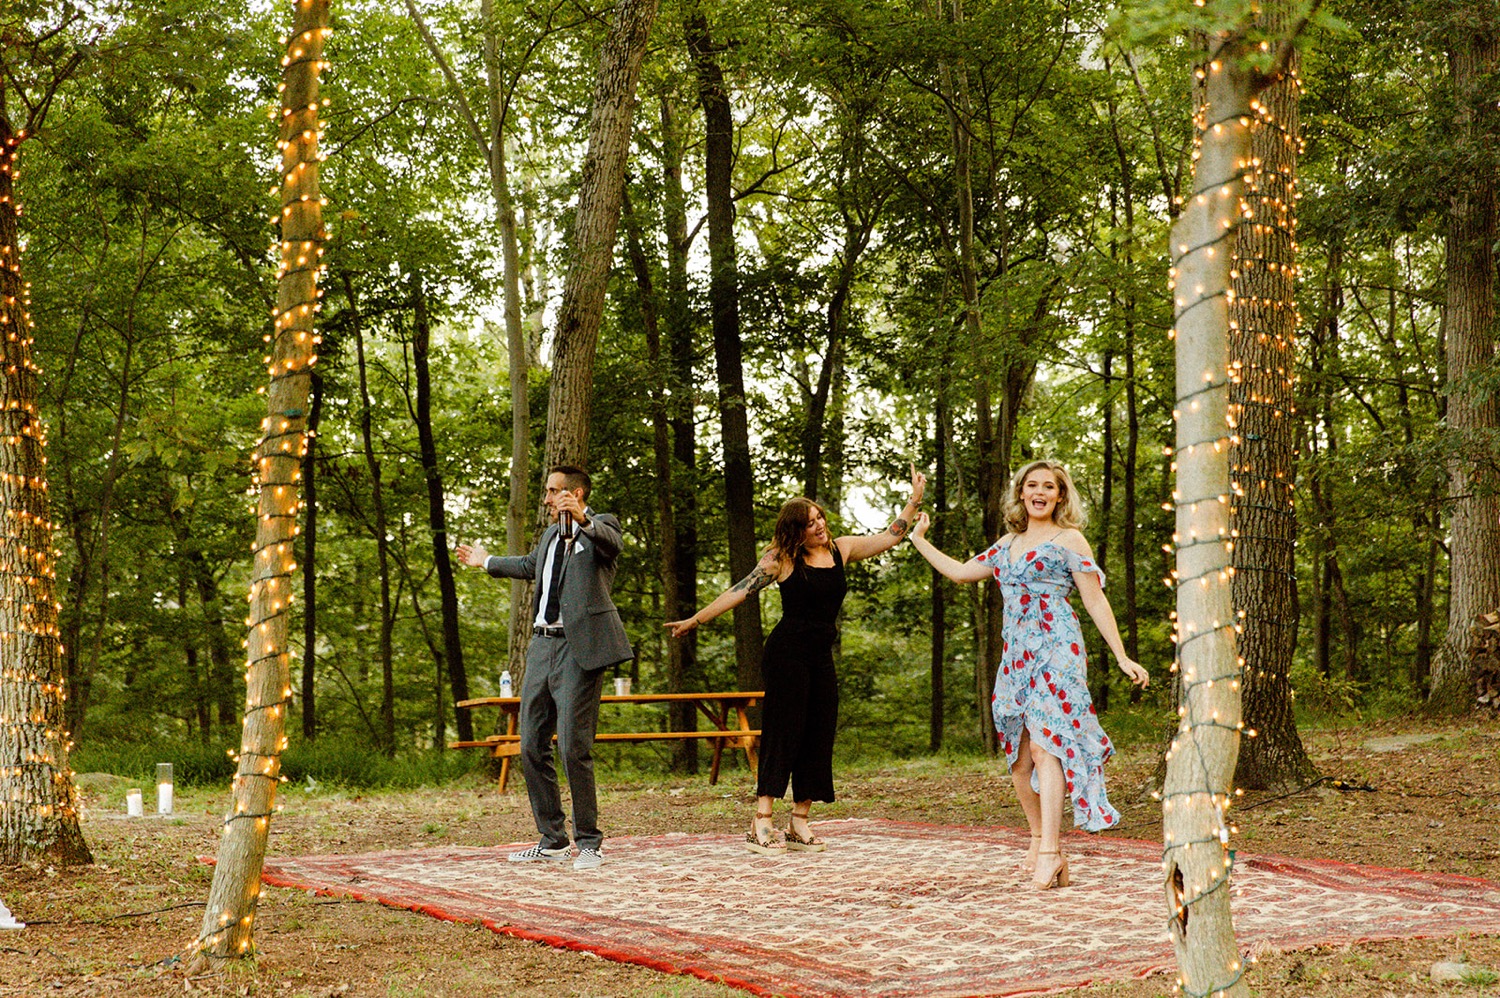 guests dancing on carpet dance floor in forest bohemian backyard wedding